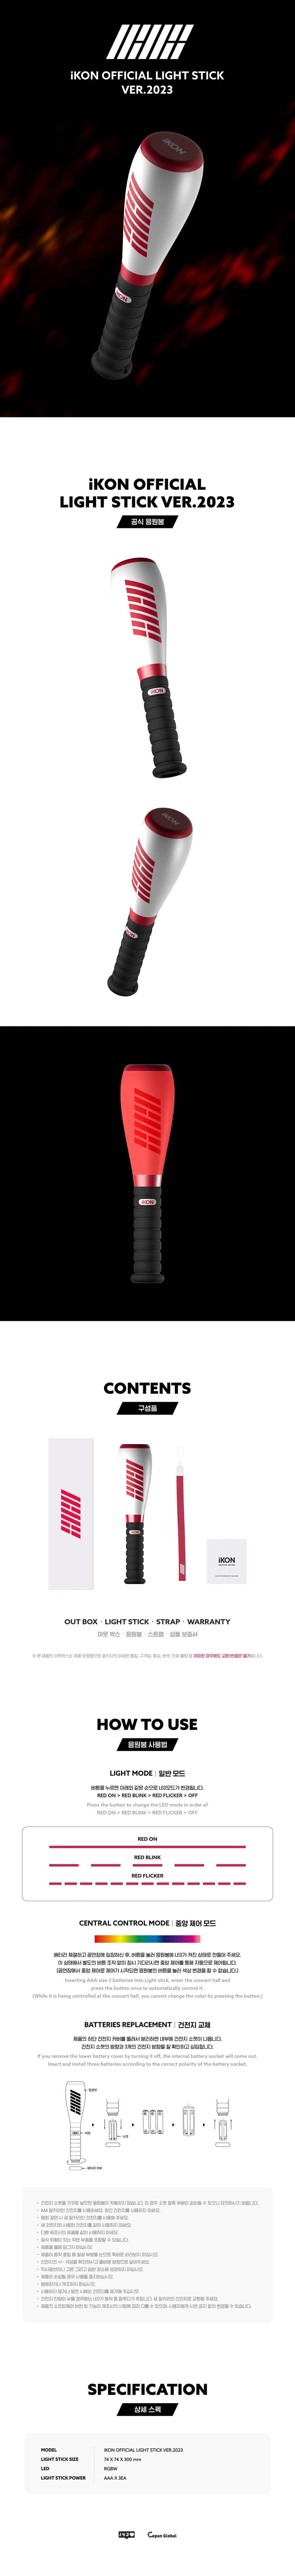 ikon-official-light-stick-ver-2023-wholesales